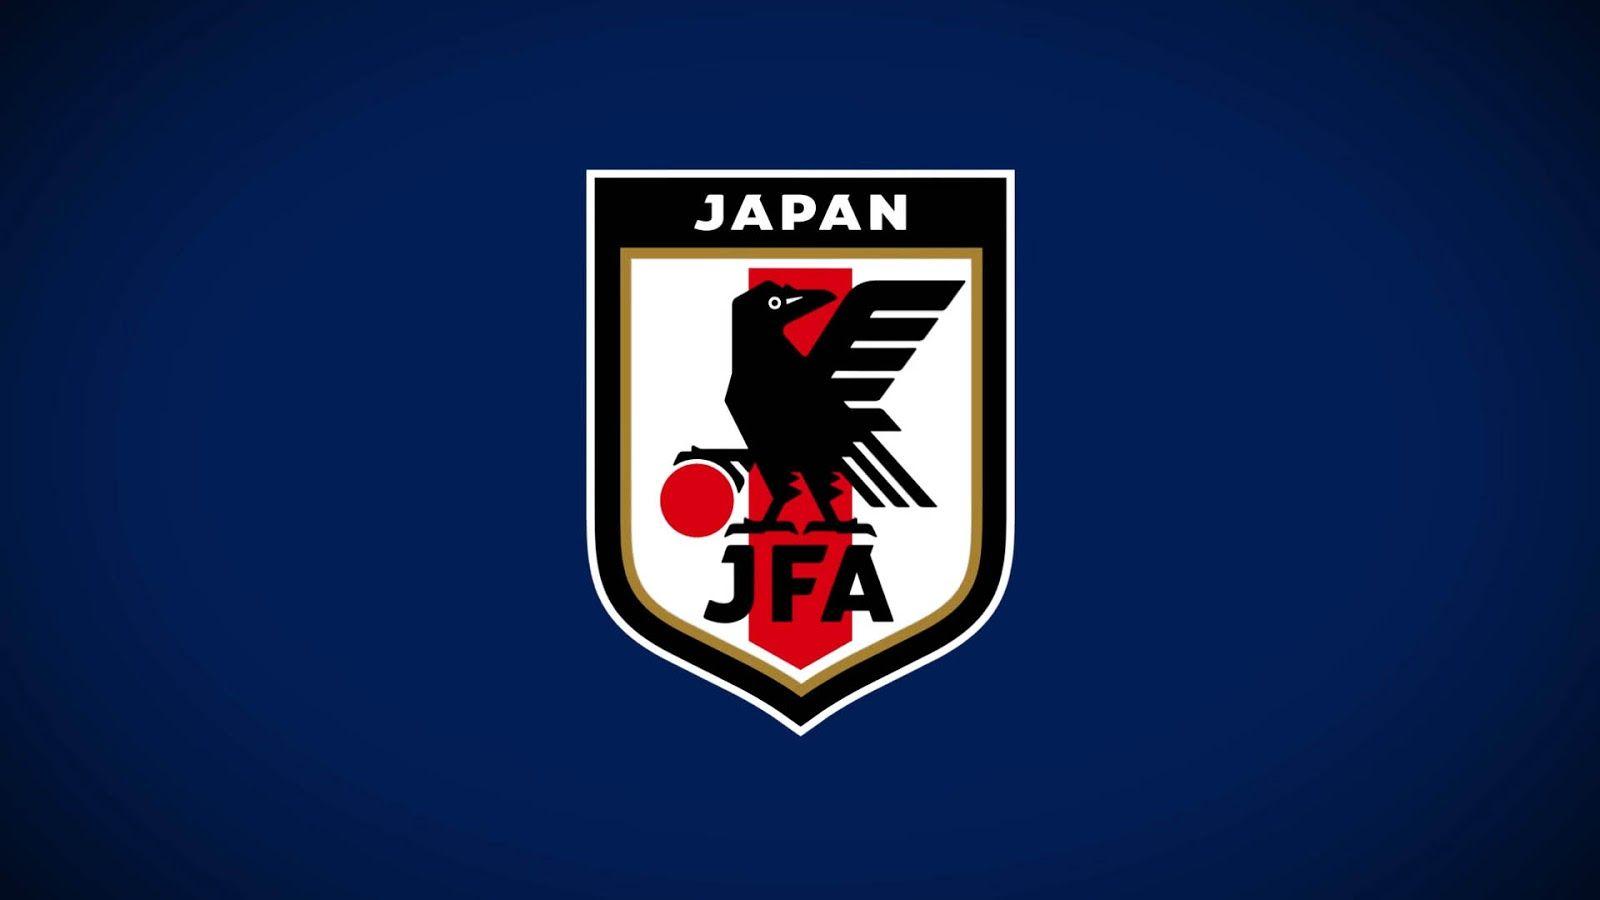 All New Japan 2018 National Team Logo Revealed